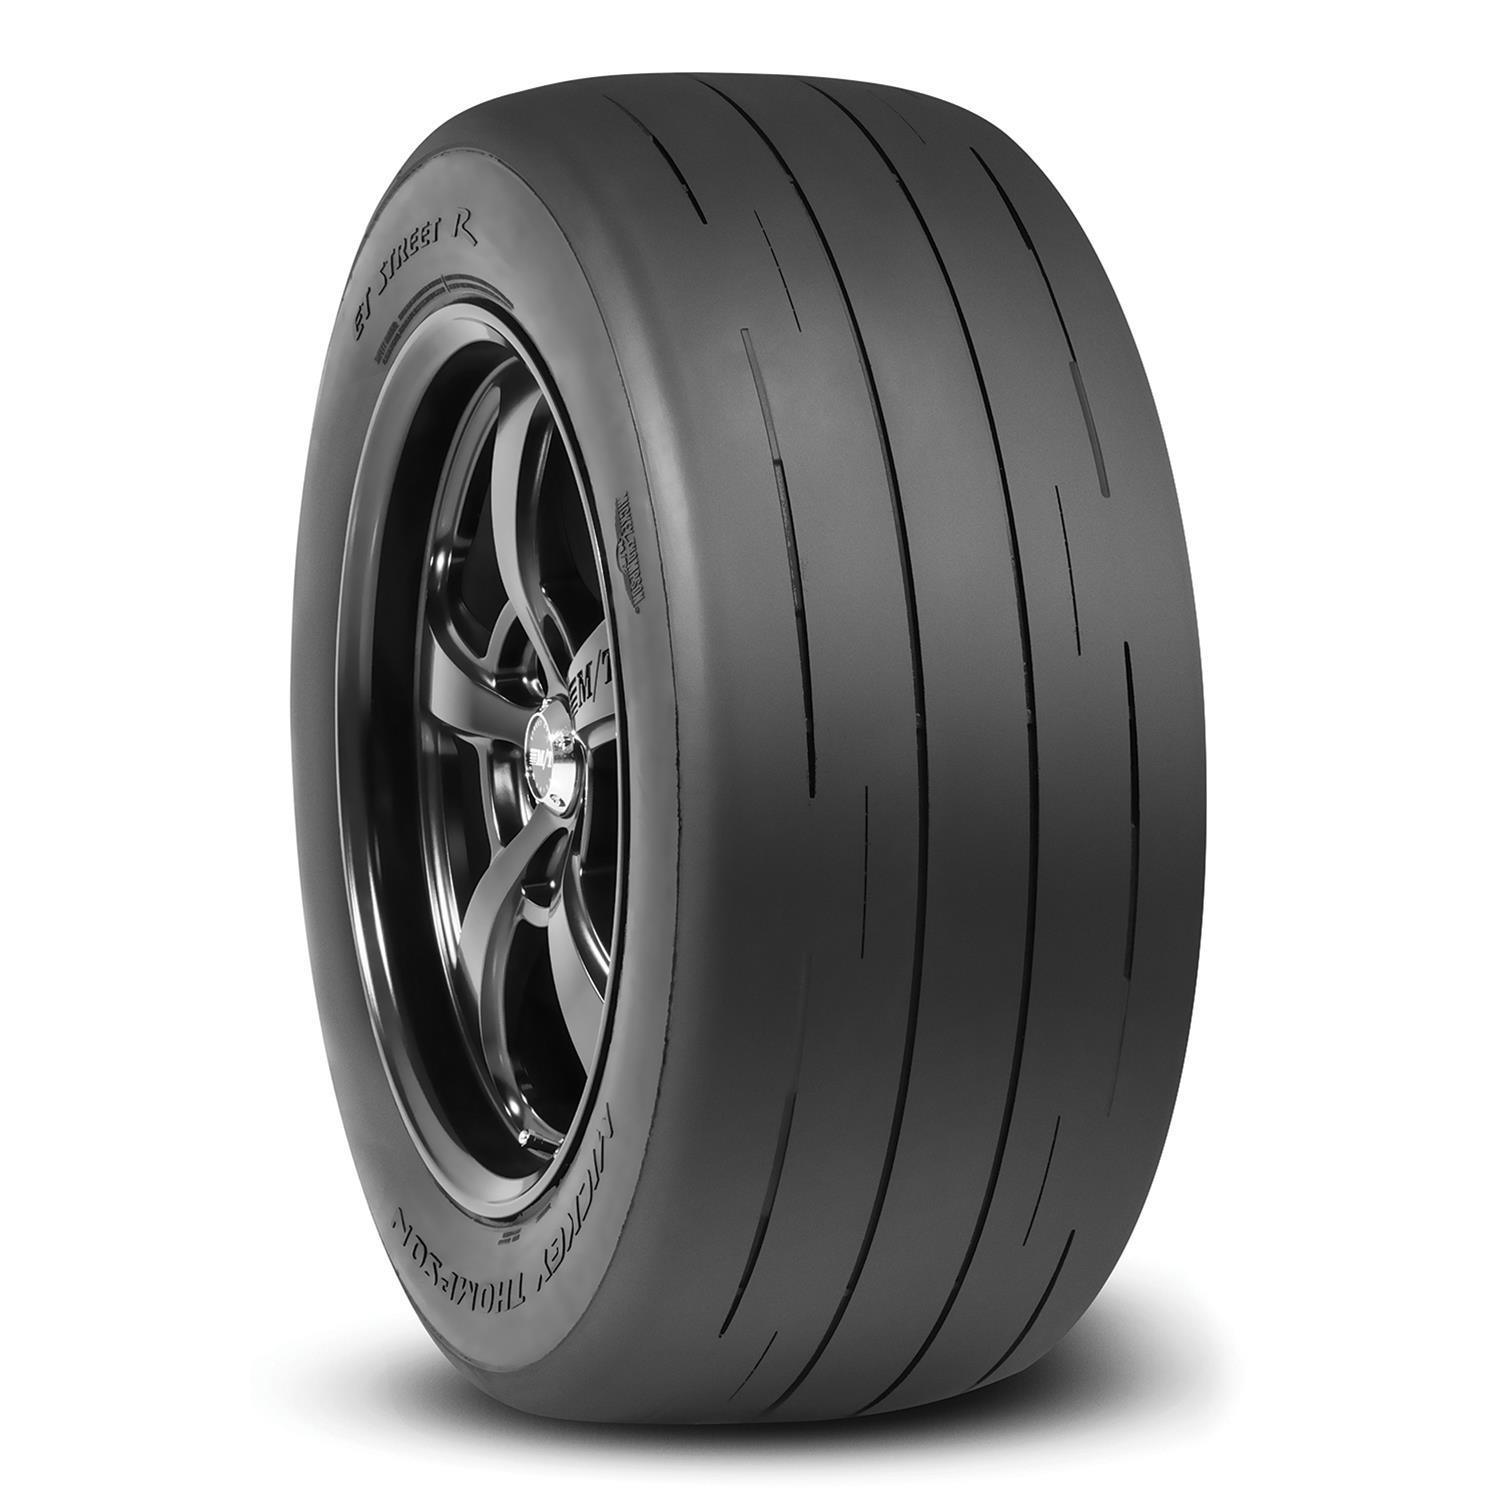 P315/35R17 ET Street R Tire - Burlile Performance Products